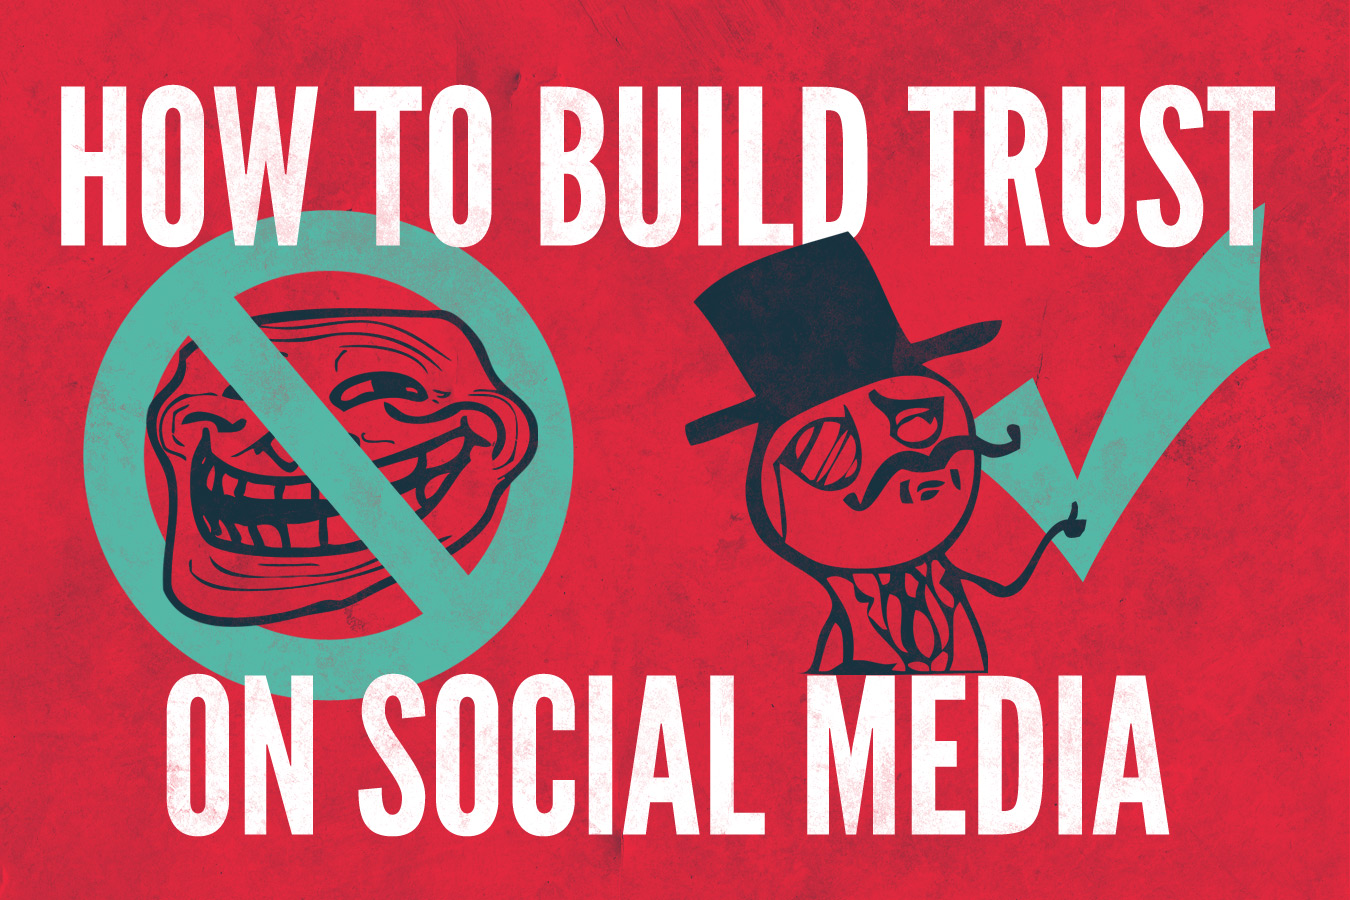 How to Build Trust on Social Media